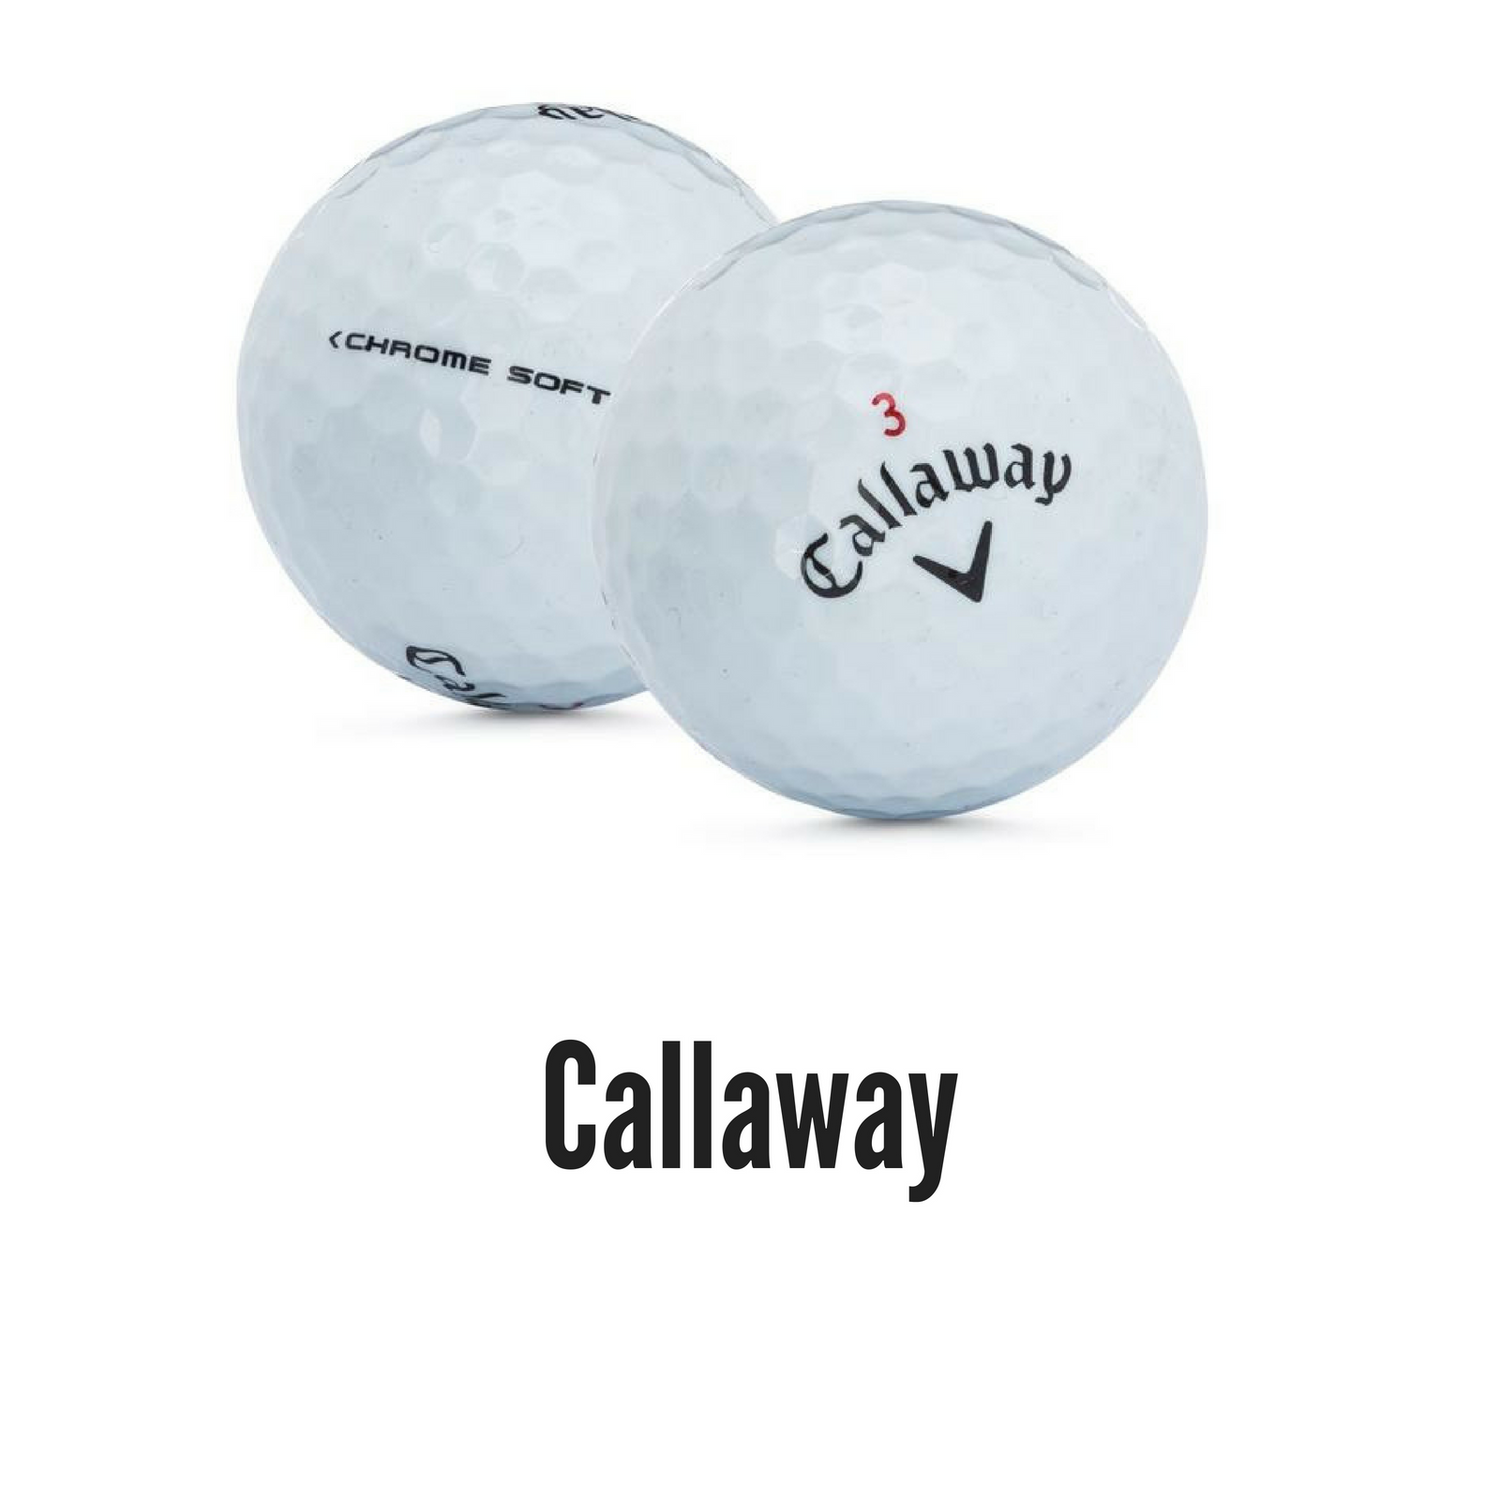 Used Callaway Golf Balls